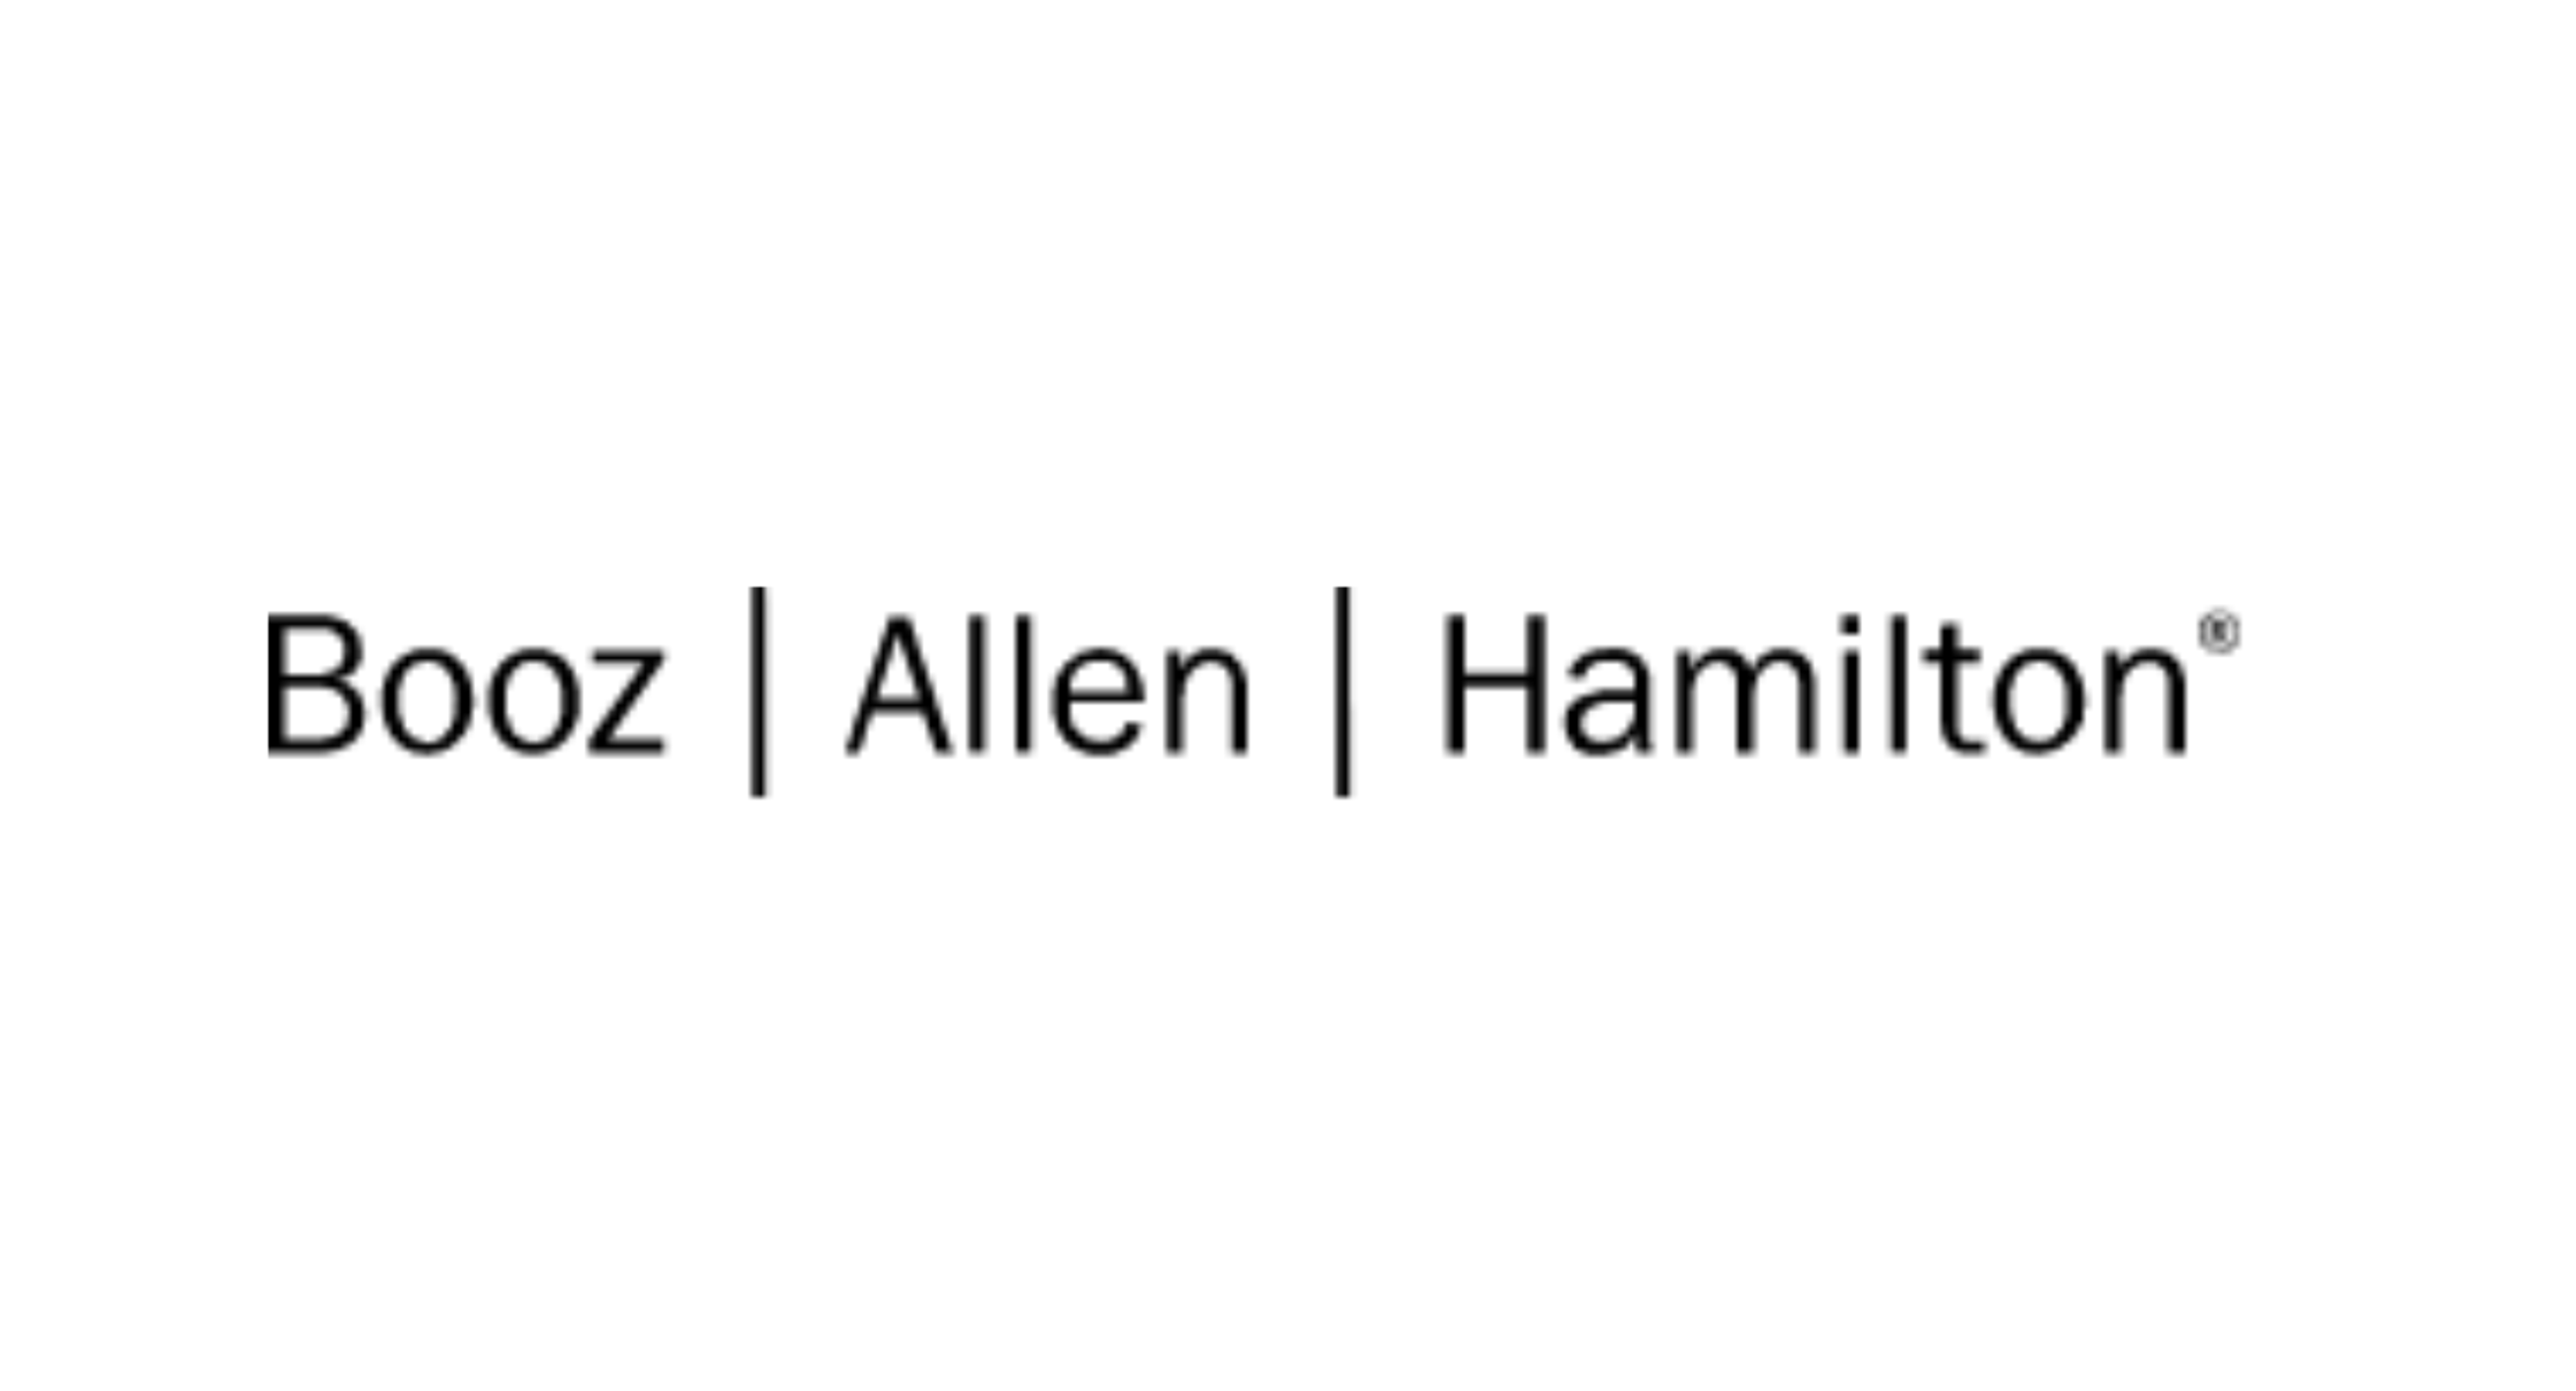 Why Booz Allen Hamilton Shares Are Rising Today